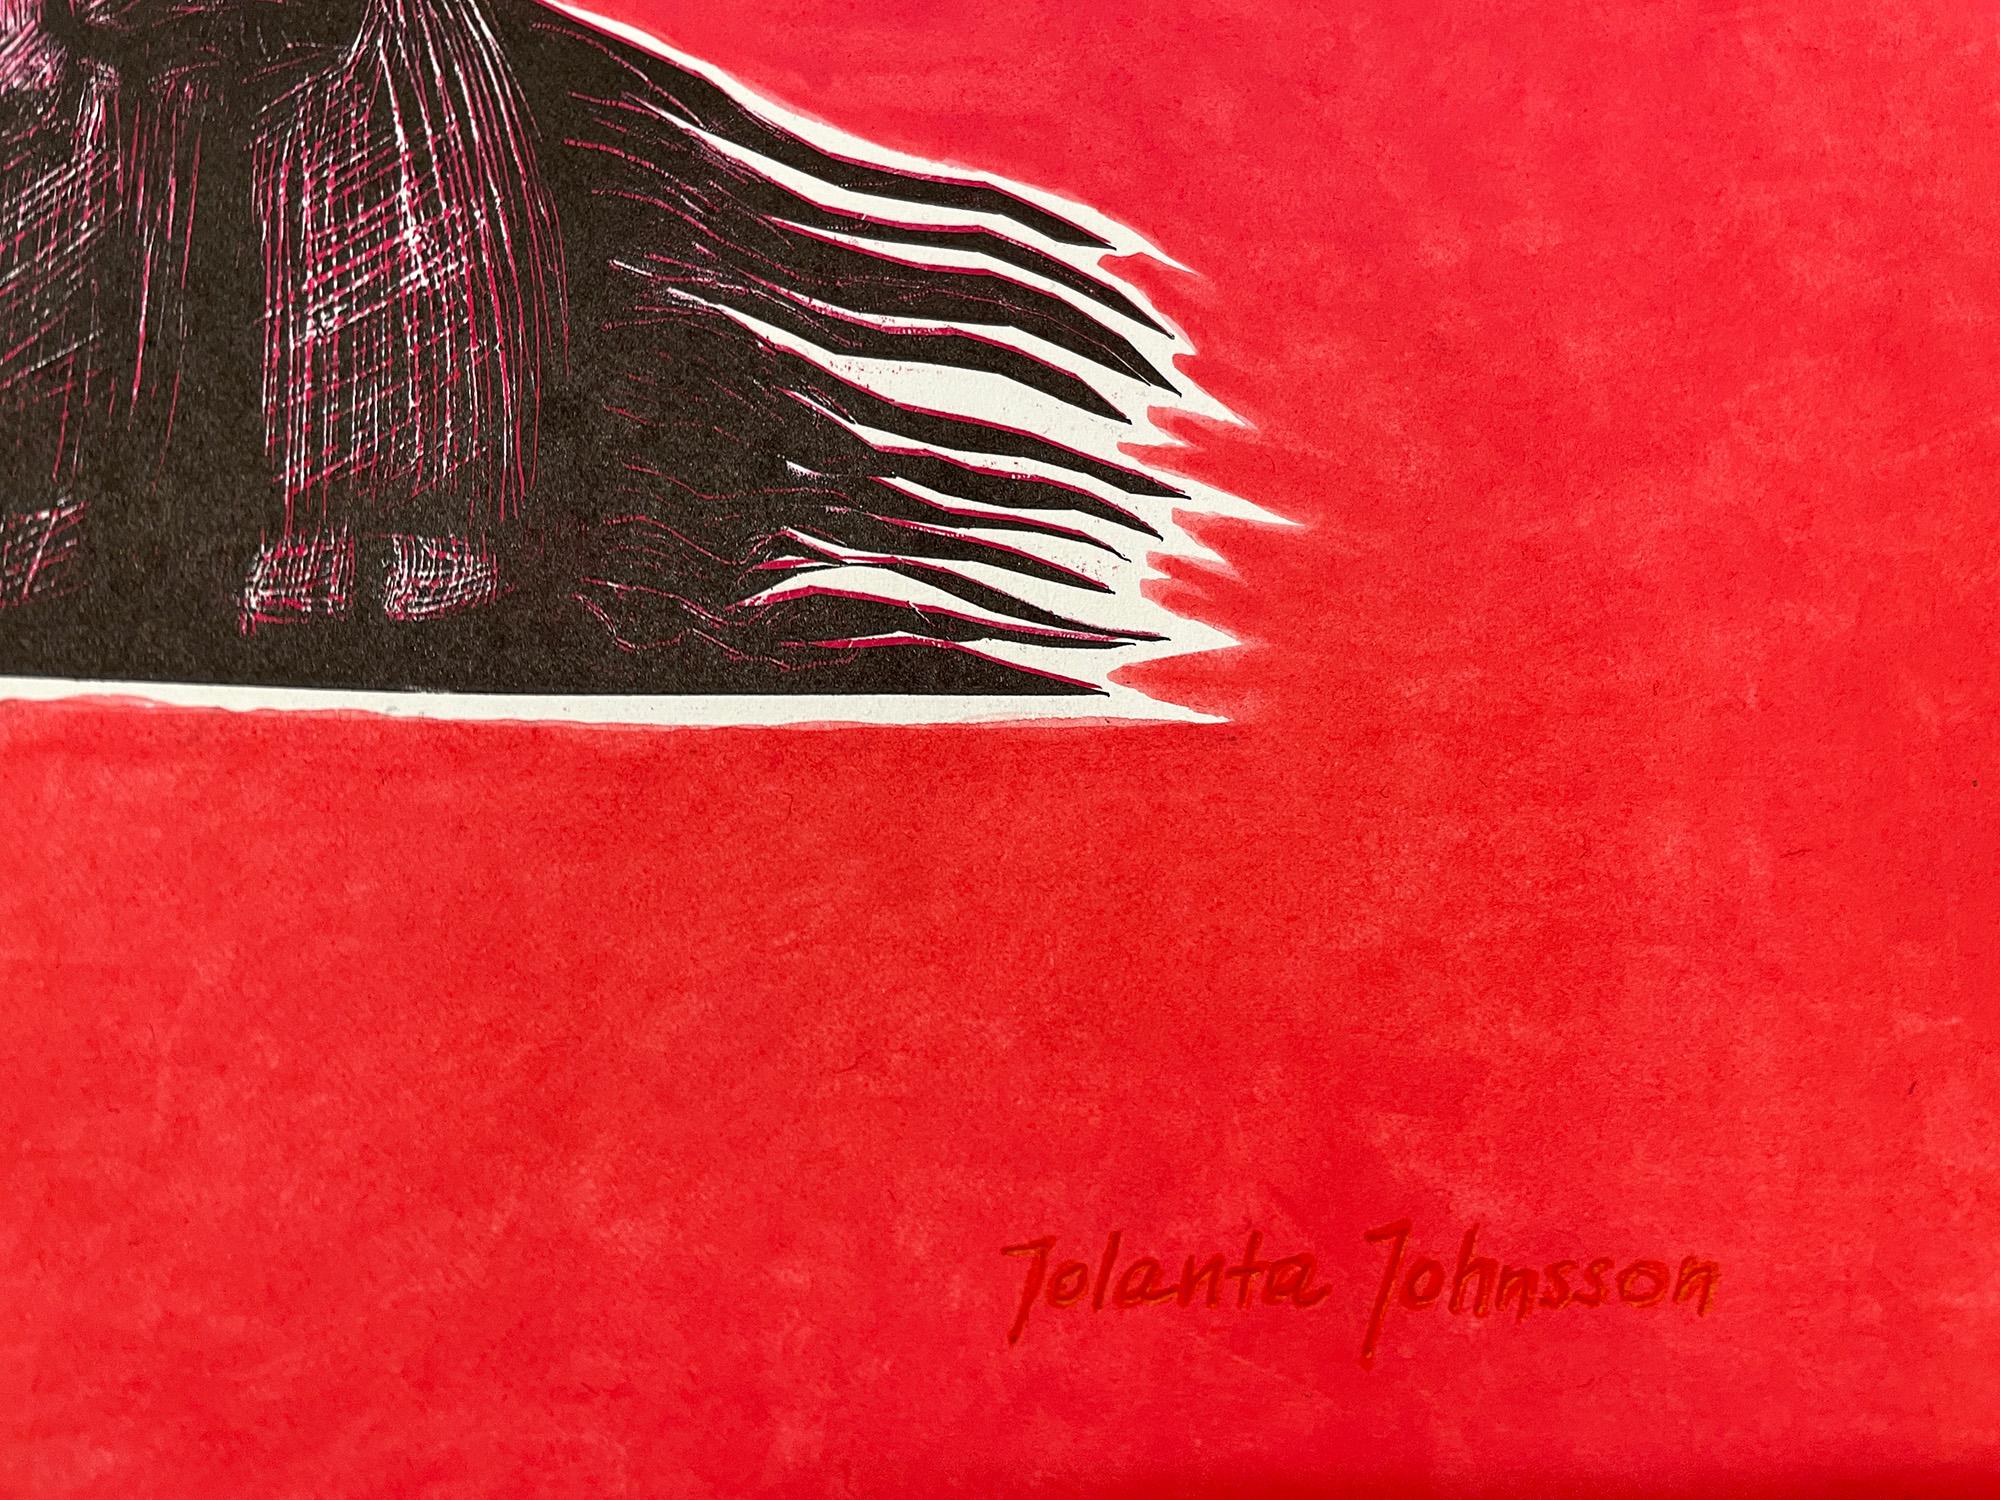 Desire in Red - Art by Jolanta Johnsson